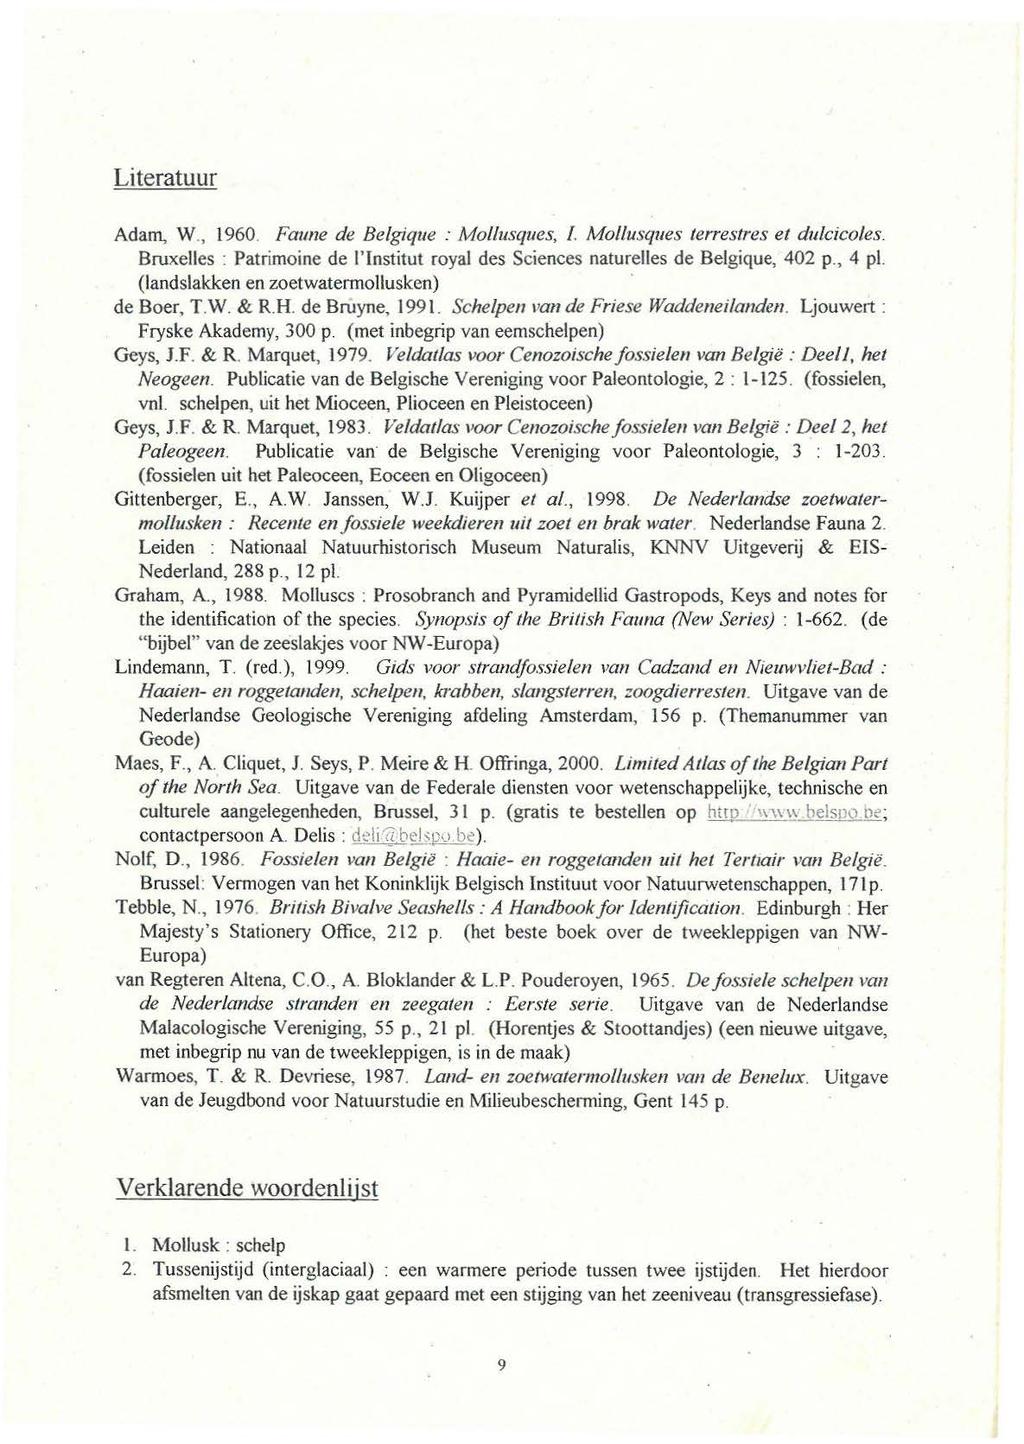 Literatuur Adam, W" 1960. Faune de Belgique : Mollusques, /. Mollusques terrestres et dulcicoles. Bruxelles : Patrimoine de l' lnstitut royal des Sciences naturelles de Belgique, 402 p., 4 pl.